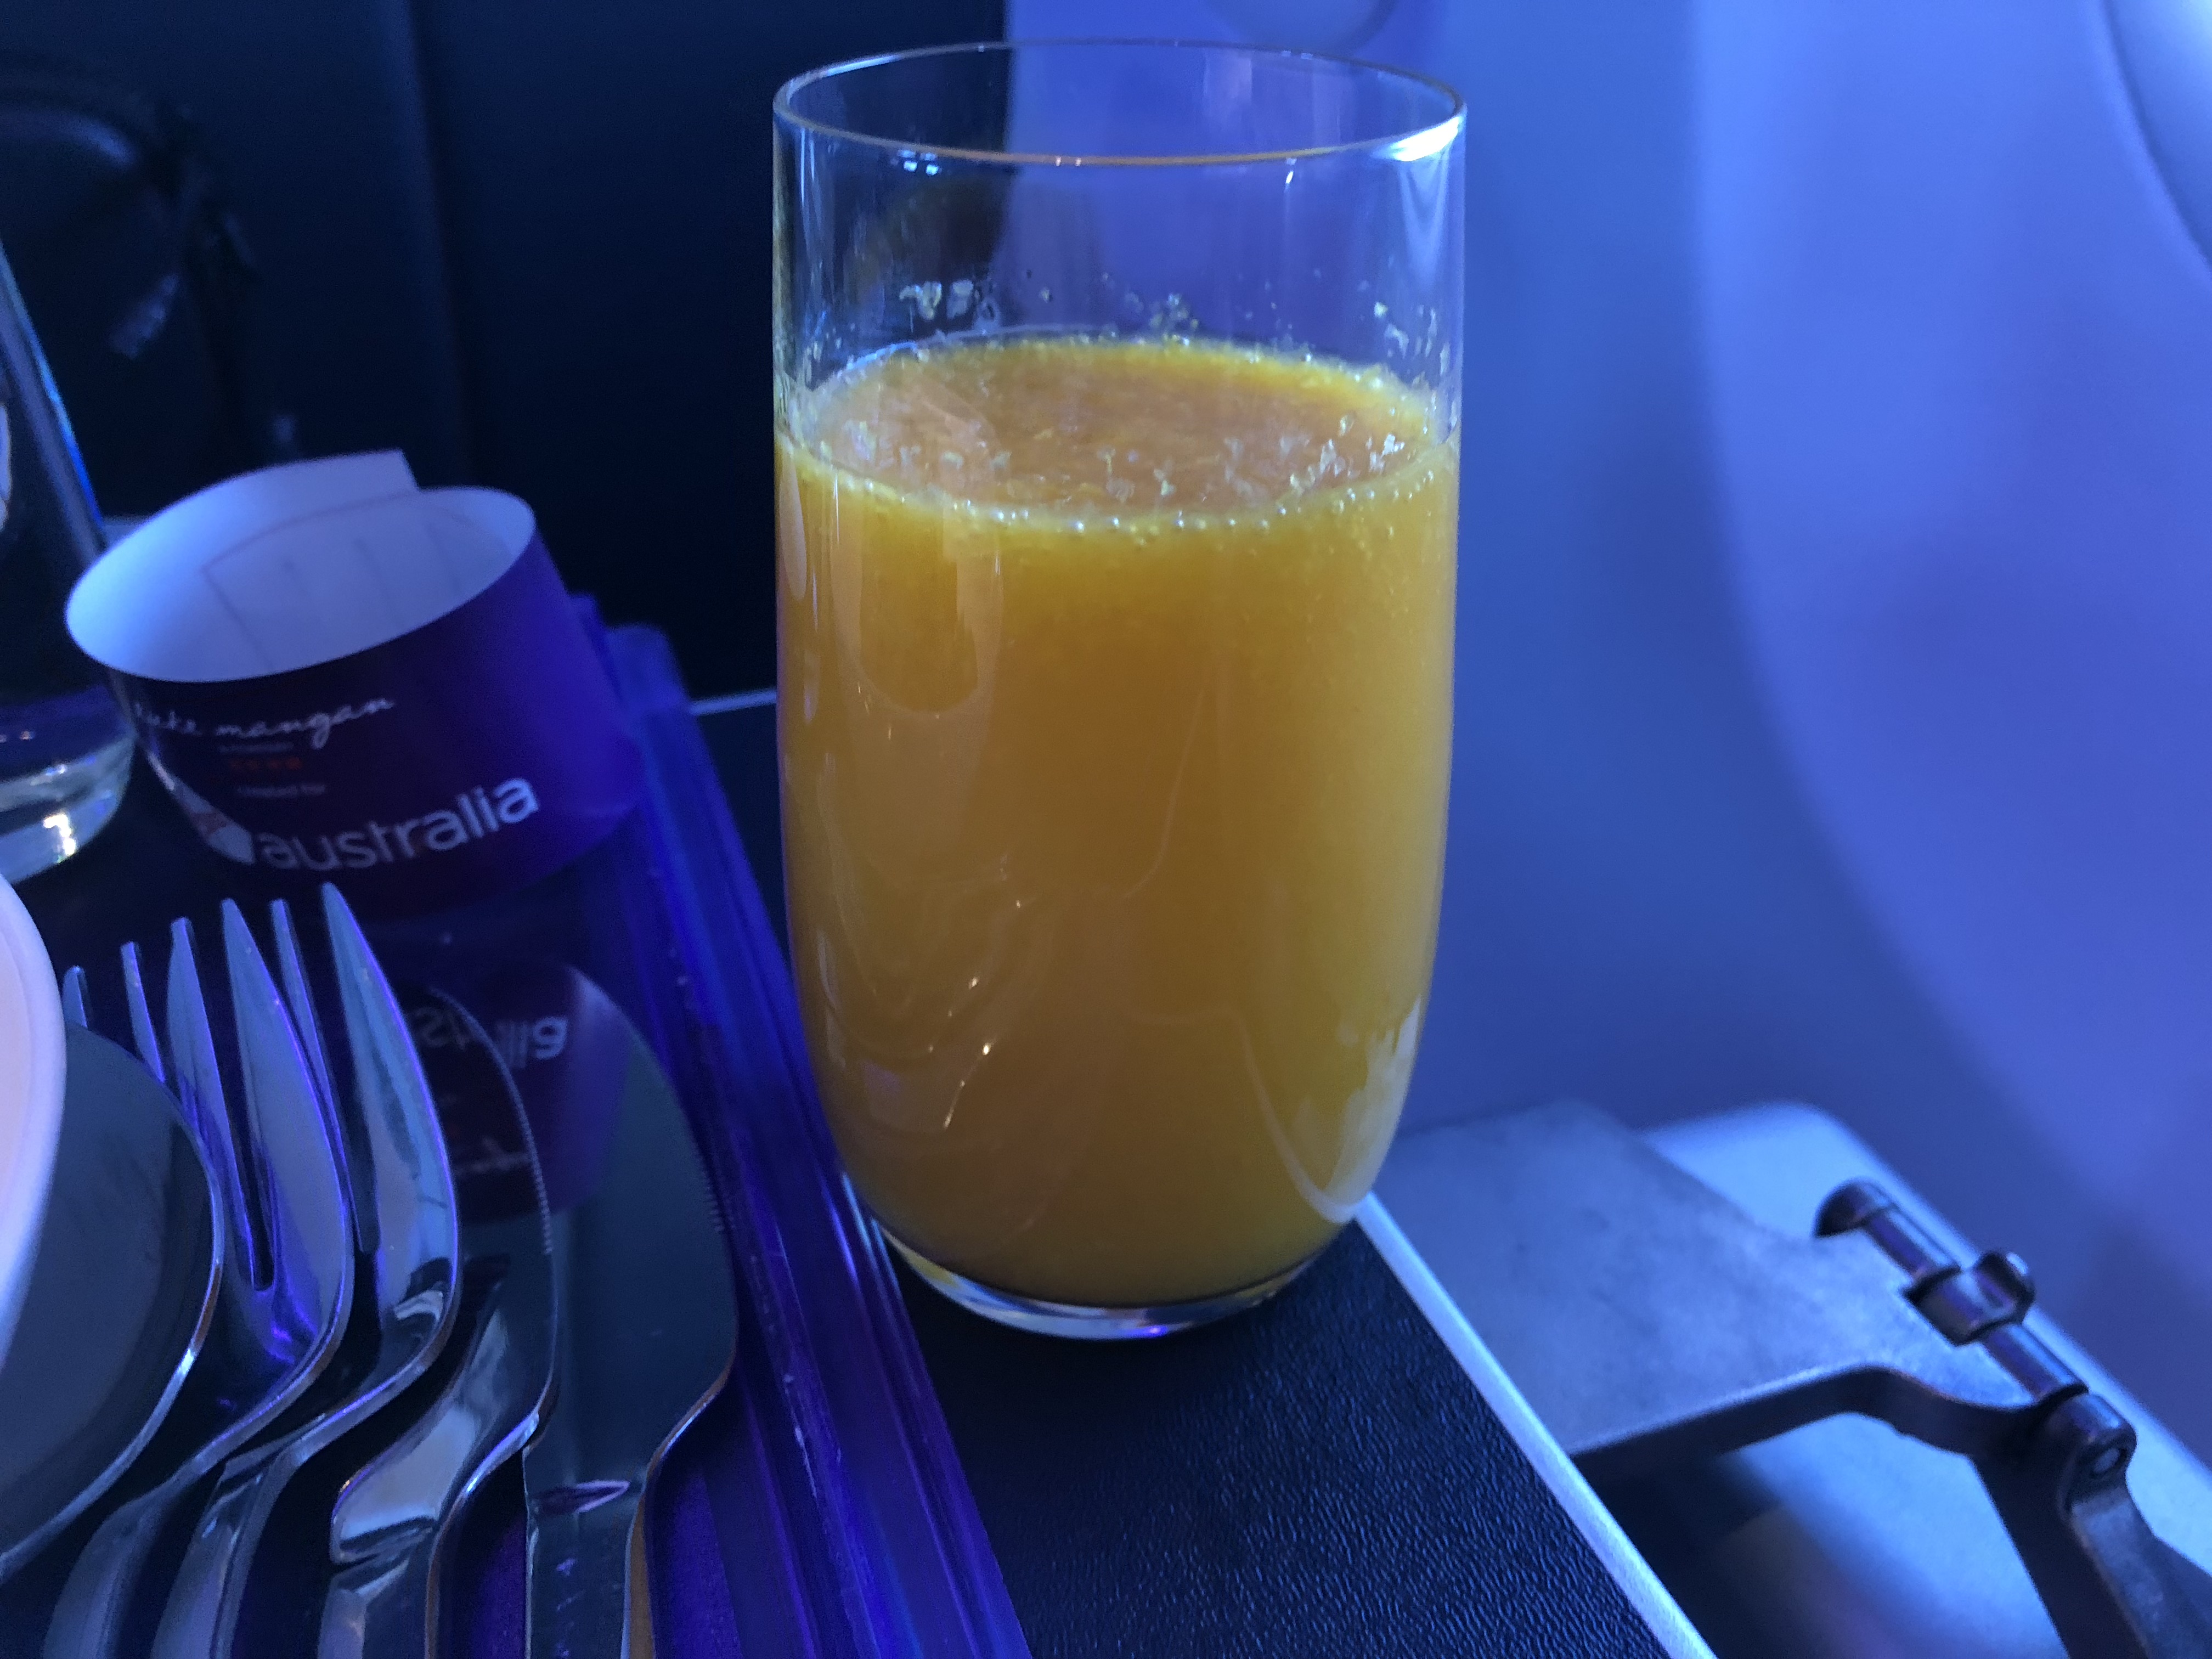 Virgin Australia Business Class Fresh Squeezed Orange Juice